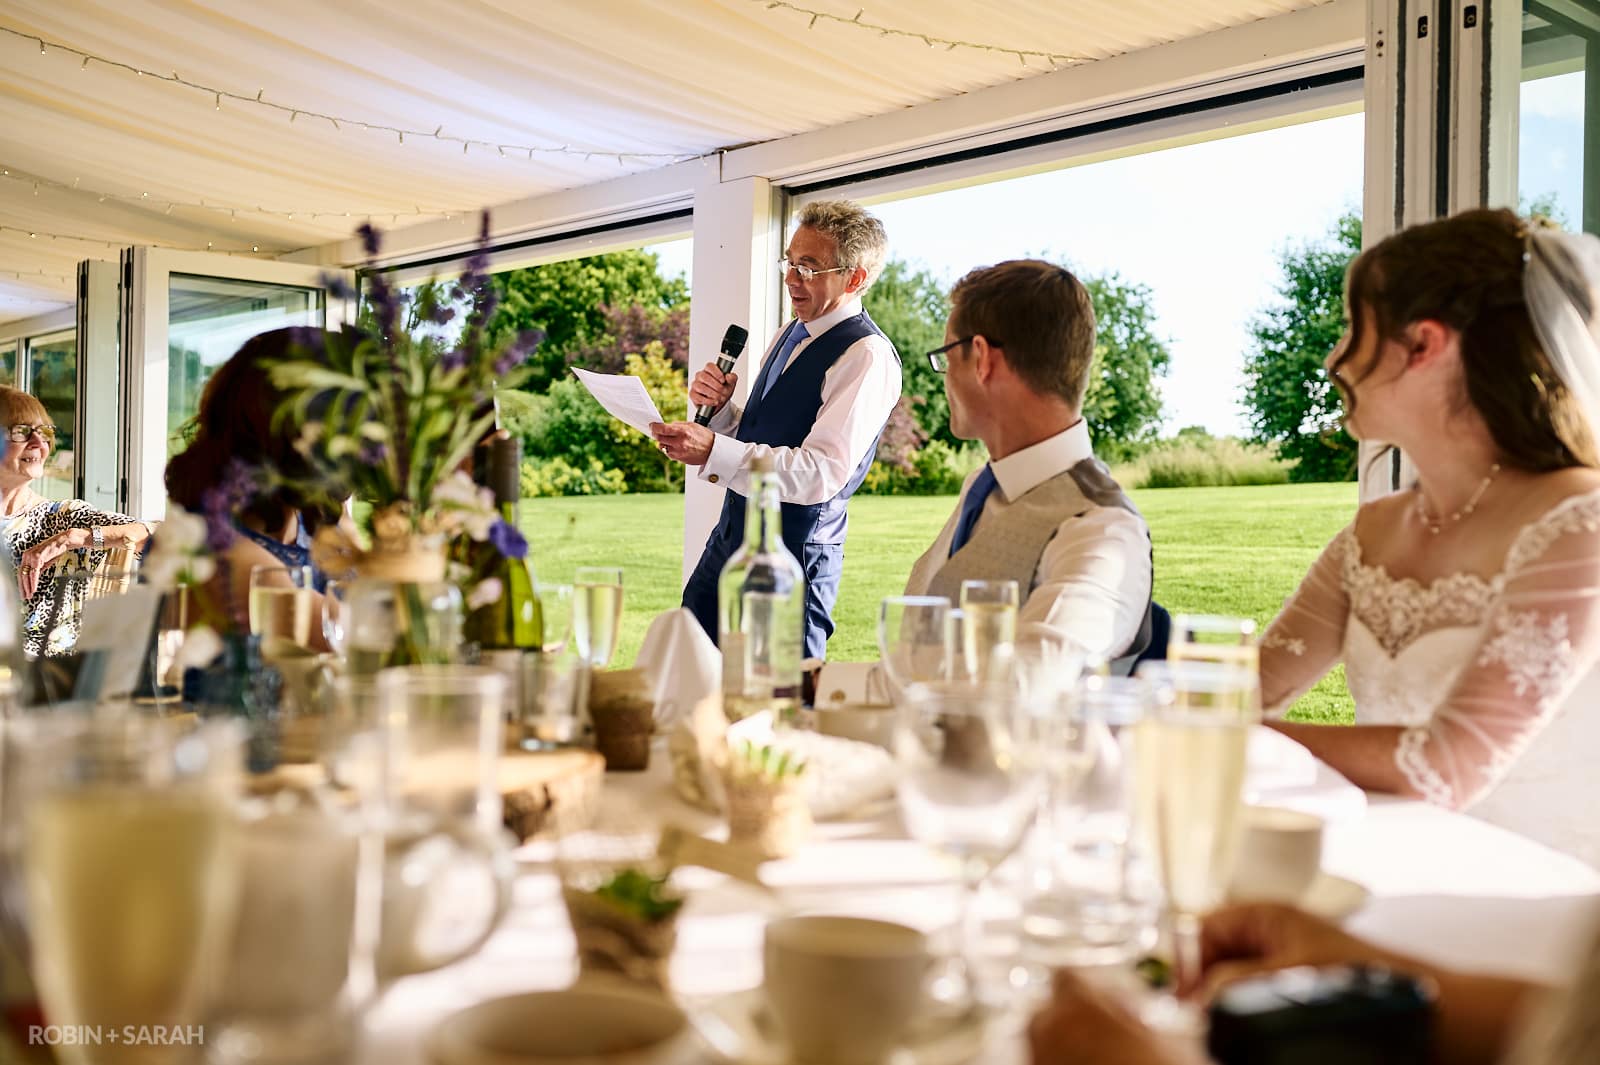 Wedding speeches at Wethele Manor